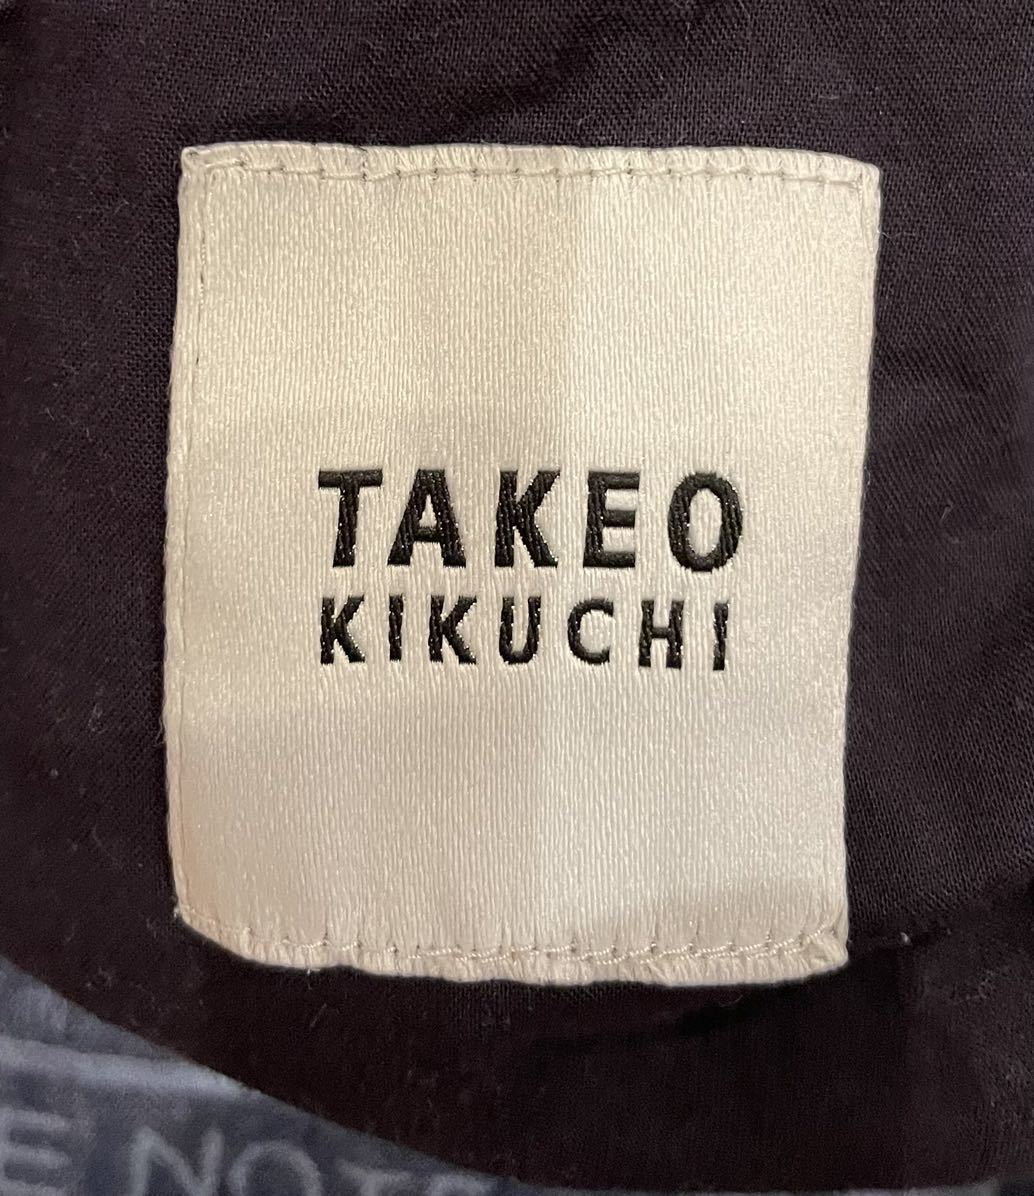 TAKEO KIKUCHI BLUE NOTE Right on s Denim short pants Jazz blue Note pattern print Takeo Kikuchi shorts show bread 